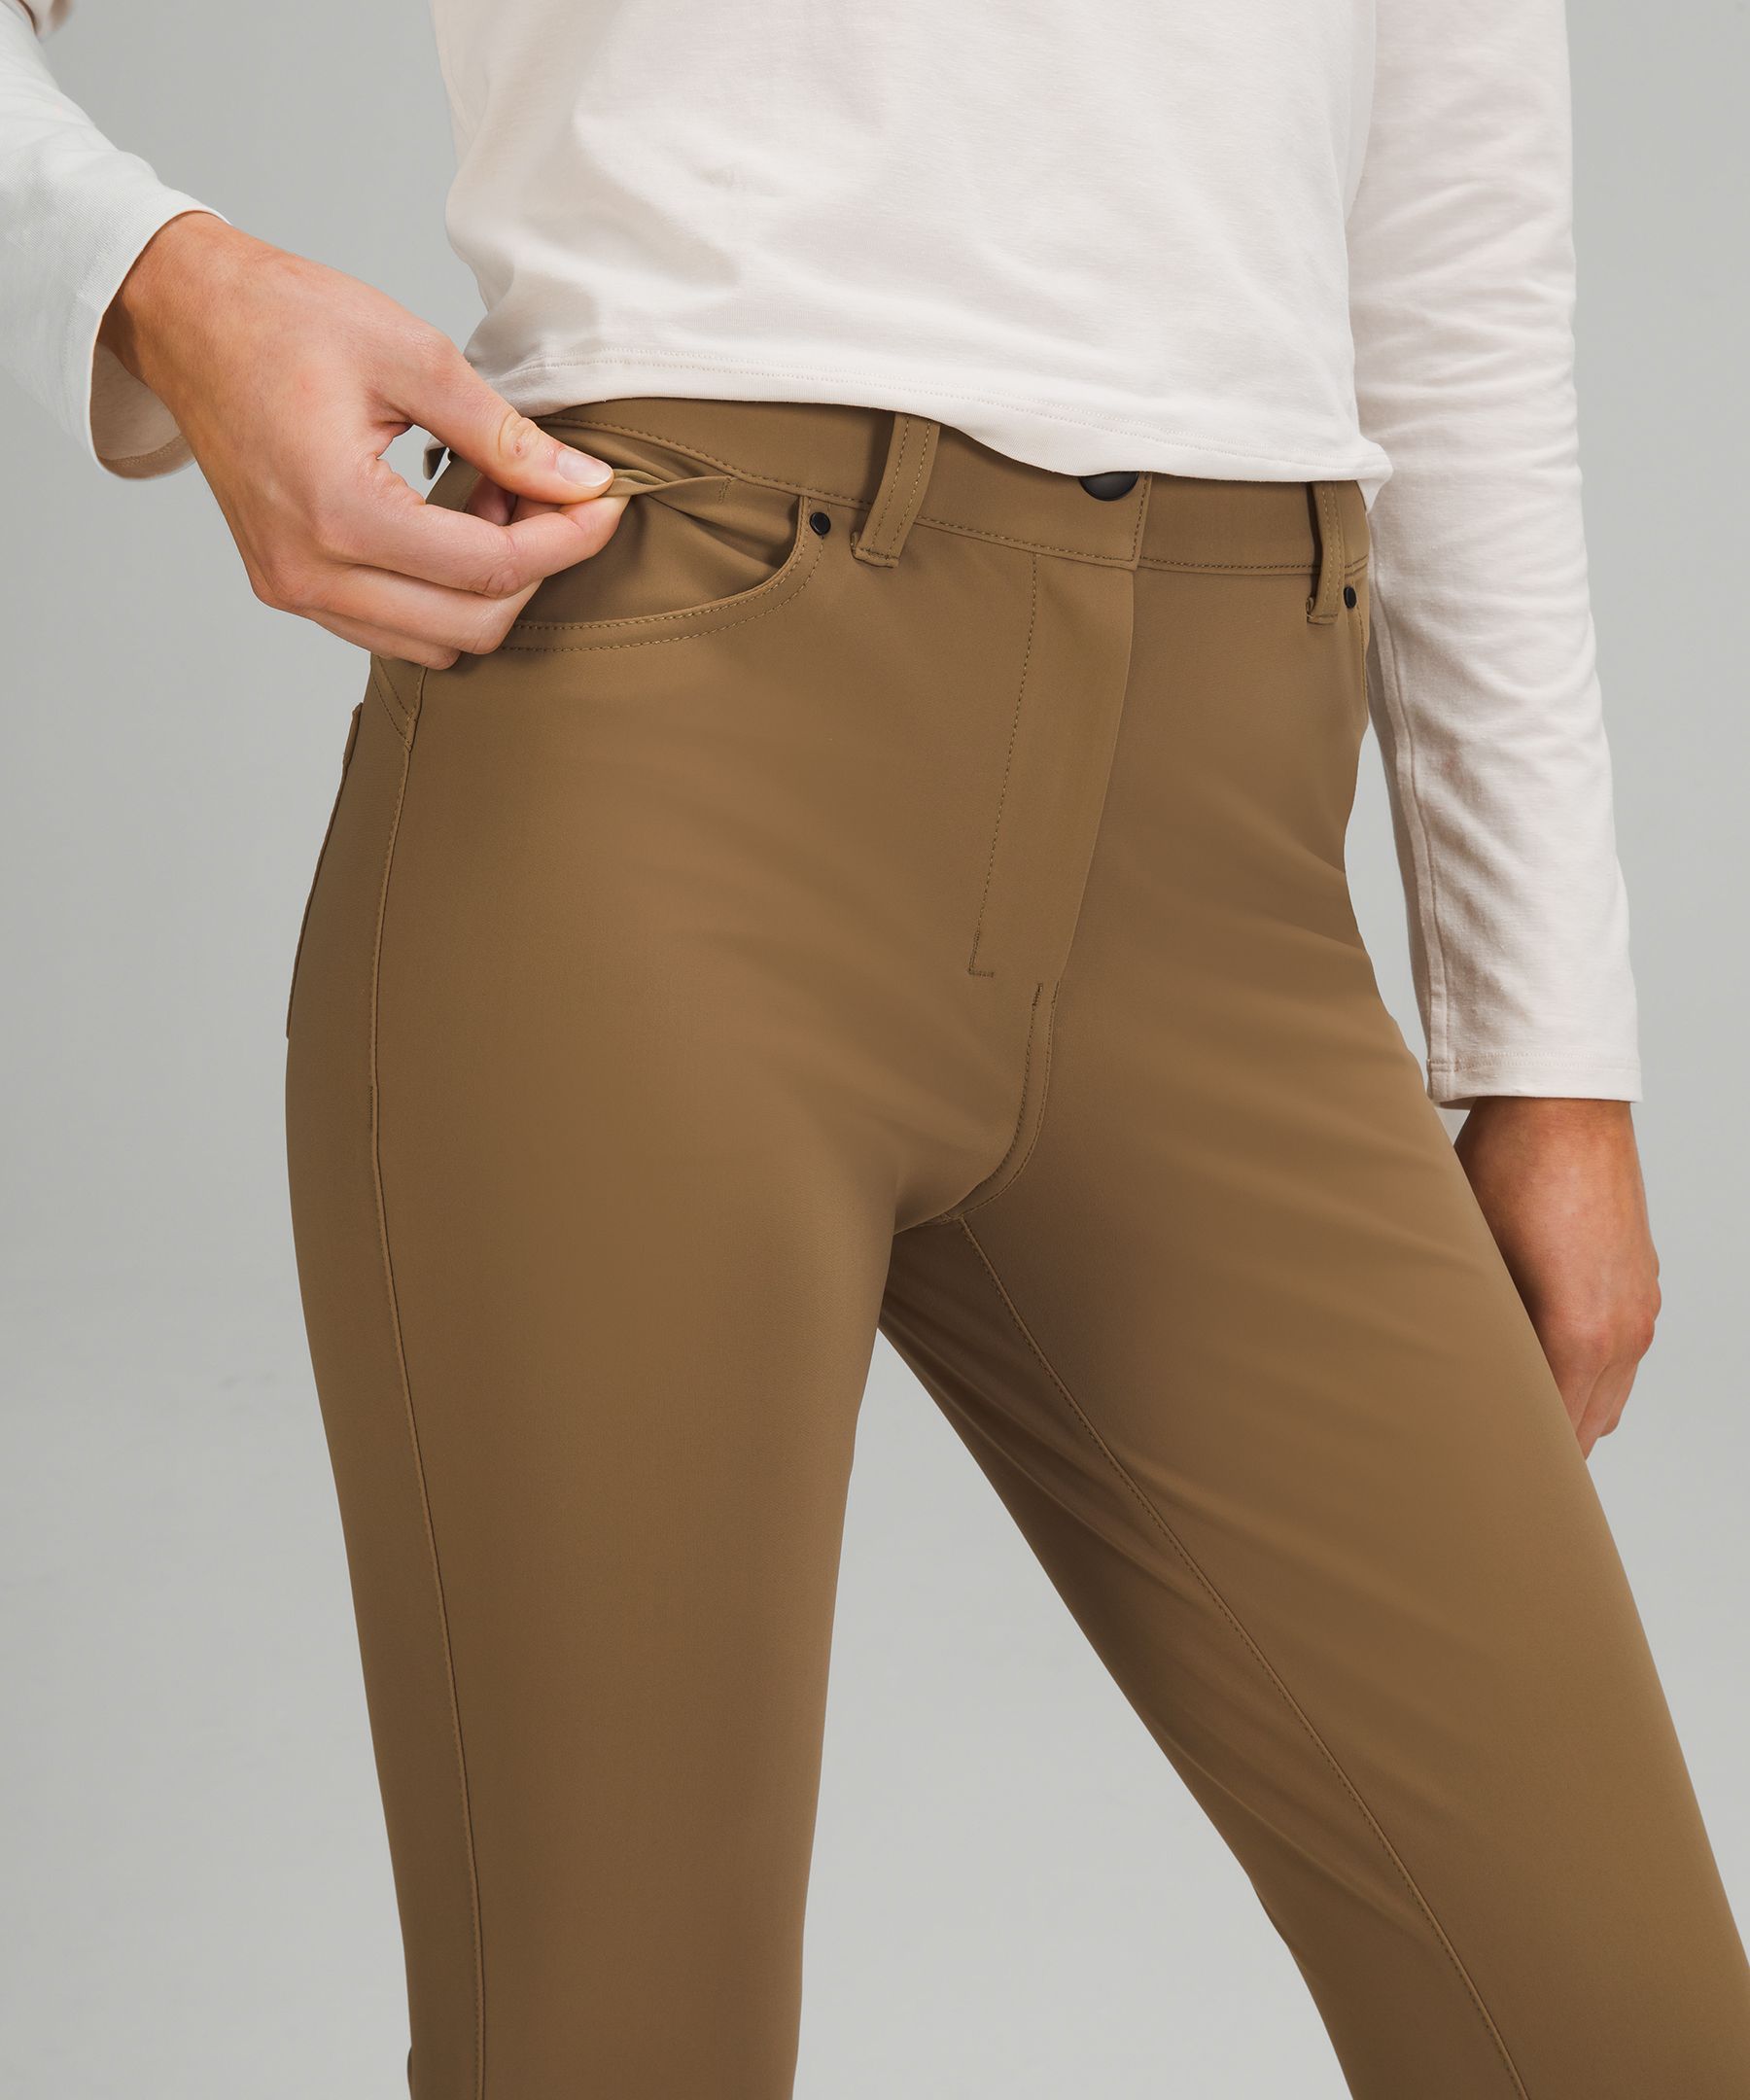 Lululemon City Sleek 5 Pocket Pant 30” BNWT  Pocket pants, Pants, Everyday  essentials products